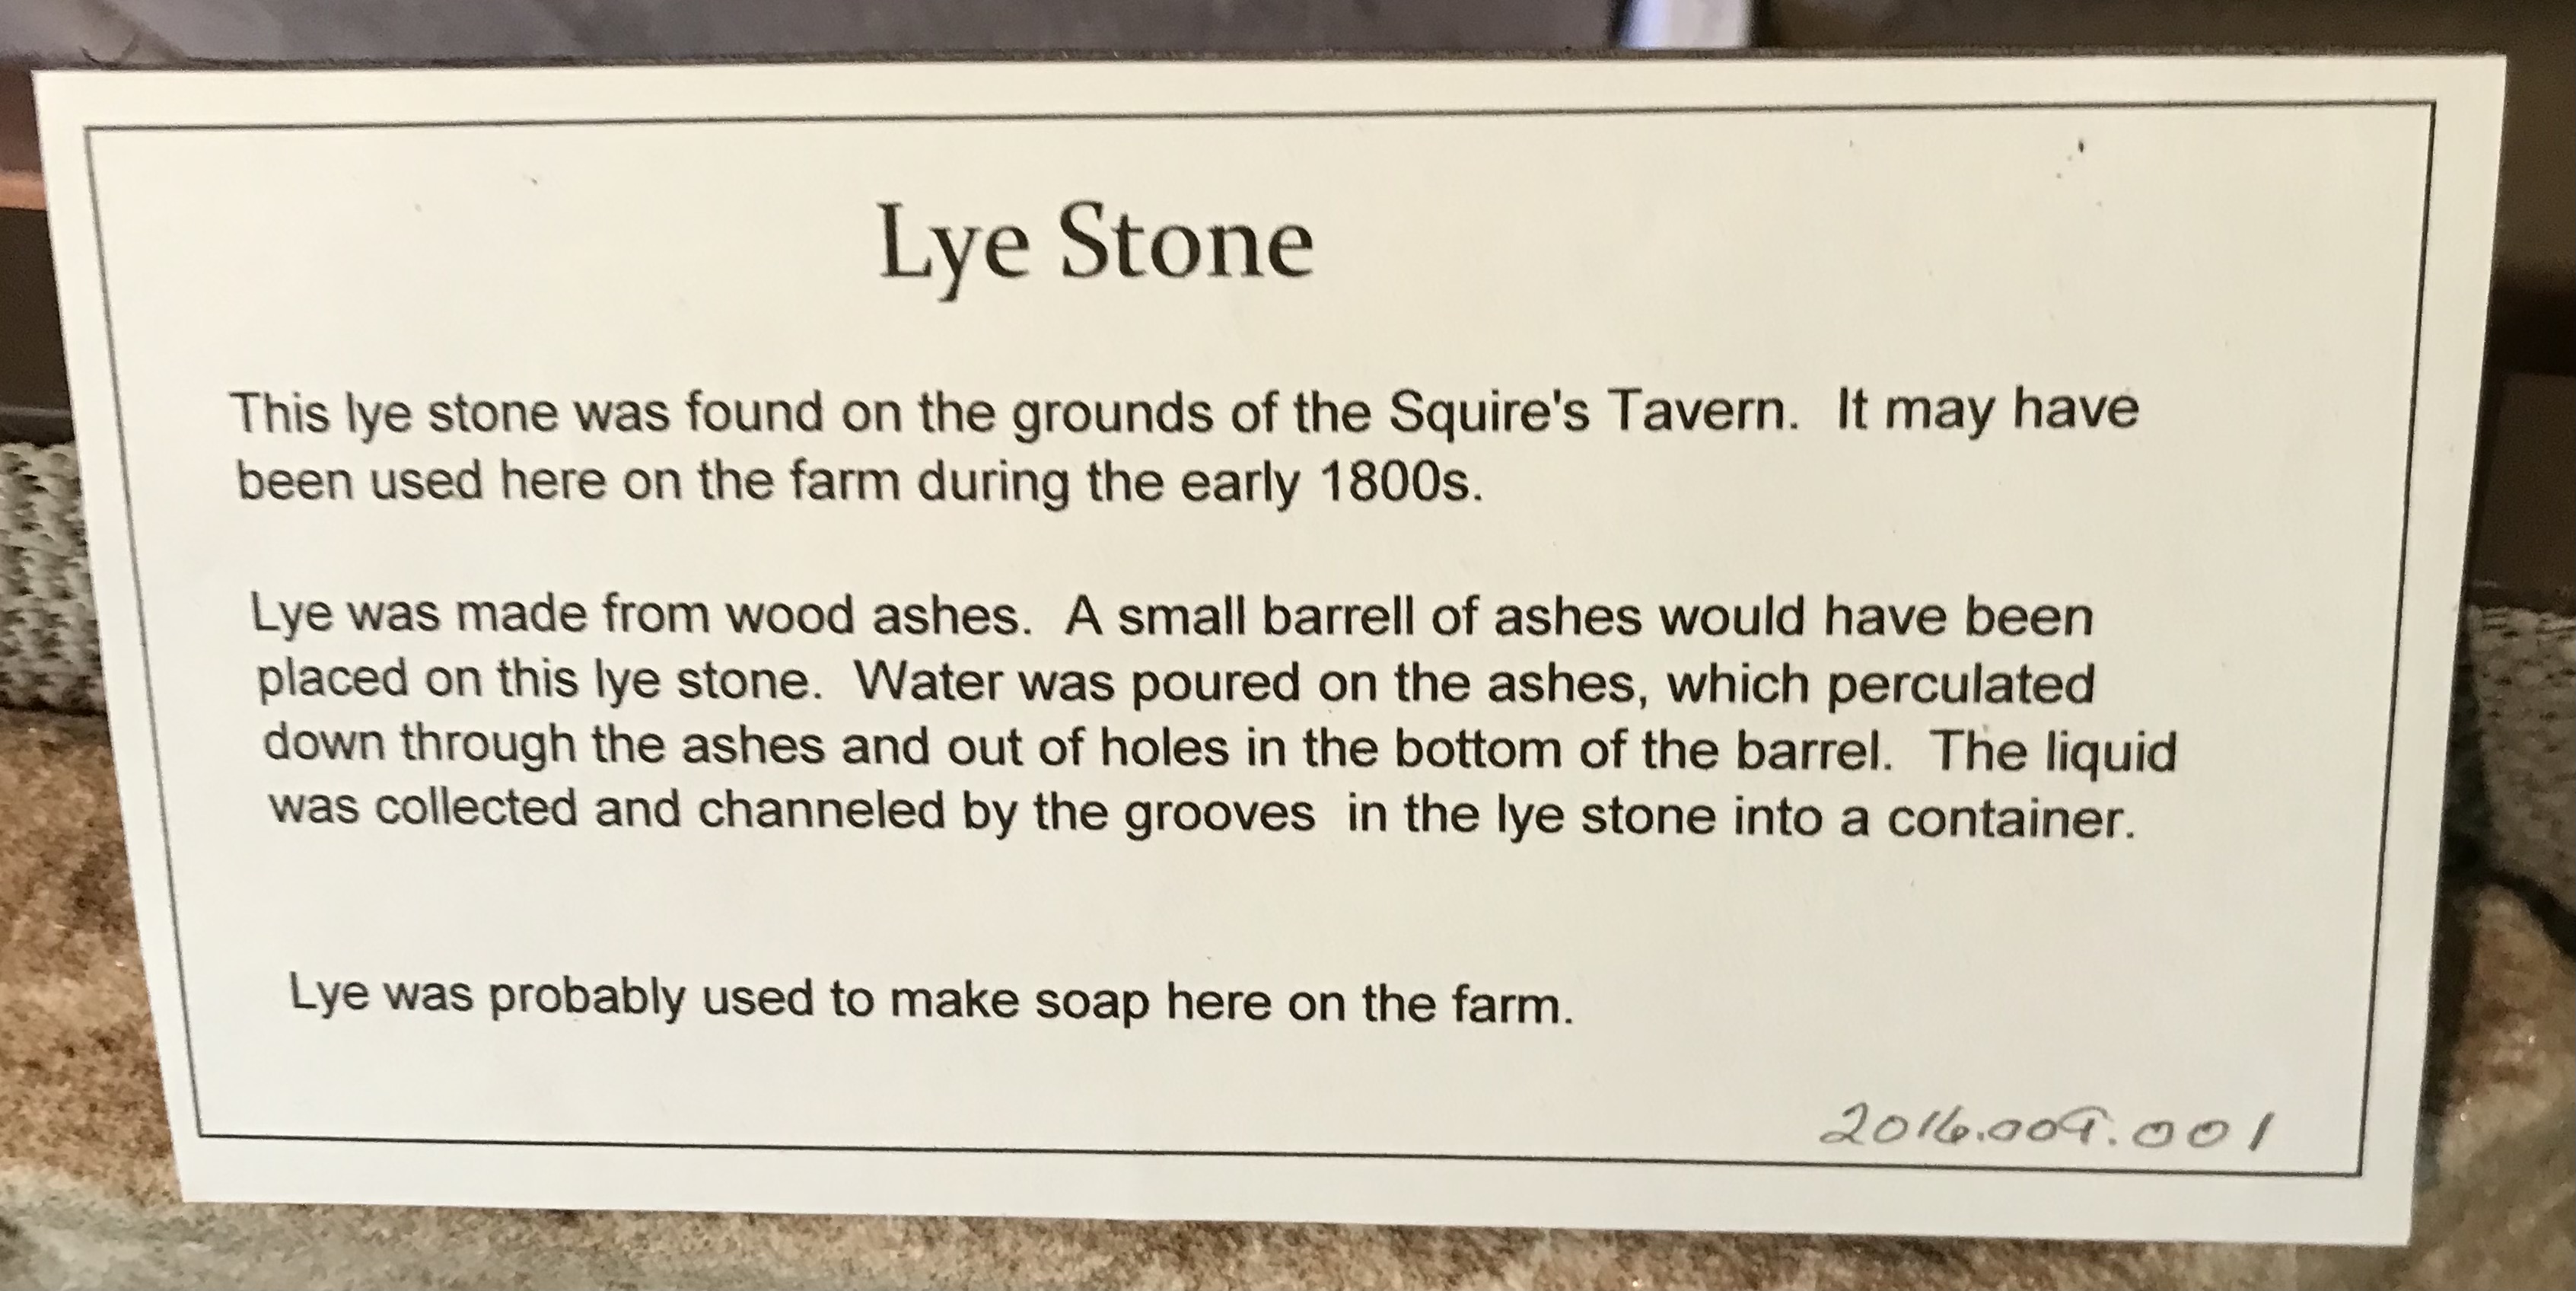 Soap making stone - Westport Historical Society